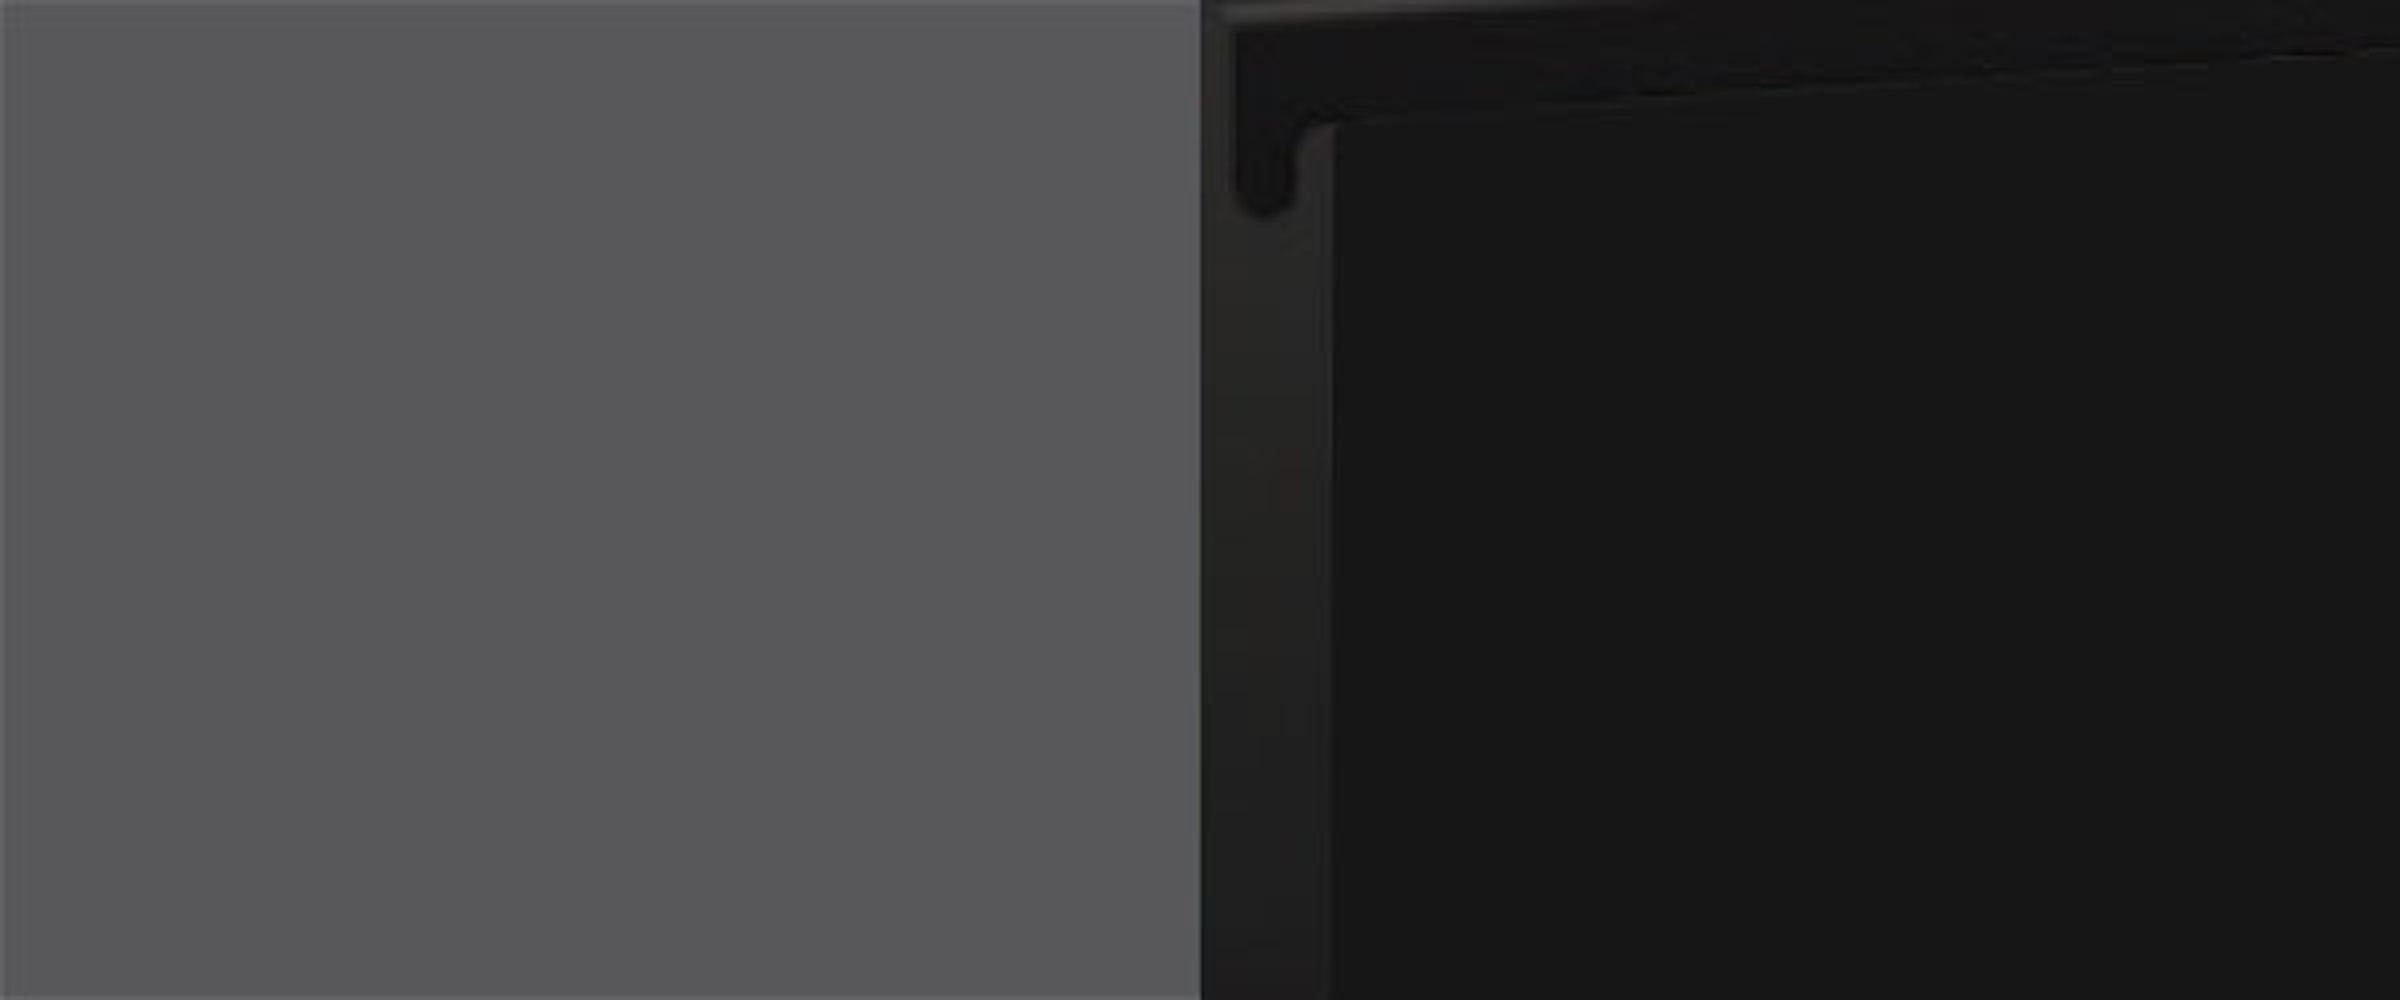 Sockelfarbe grifflos Velden, schwarz und Sockelblende super Front- wählbar 45cm matt vollintegriert Feldmann-Wohnen